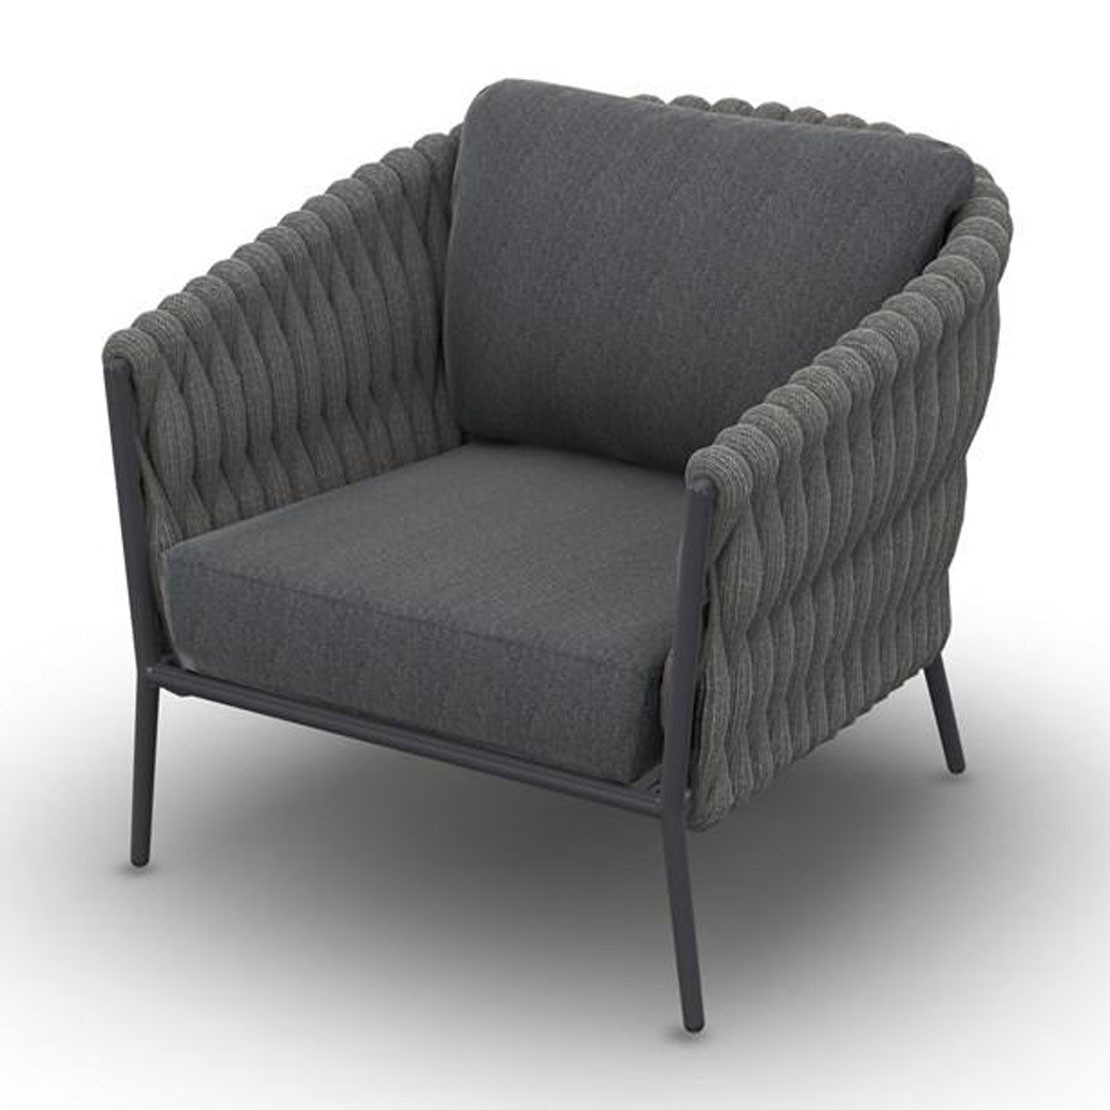 Fortuna Socks Sofa 1-Seat Lounge Chair Alu Charcoal Mat Socks Cushion Seat + Back Single Sunbrella Sooty